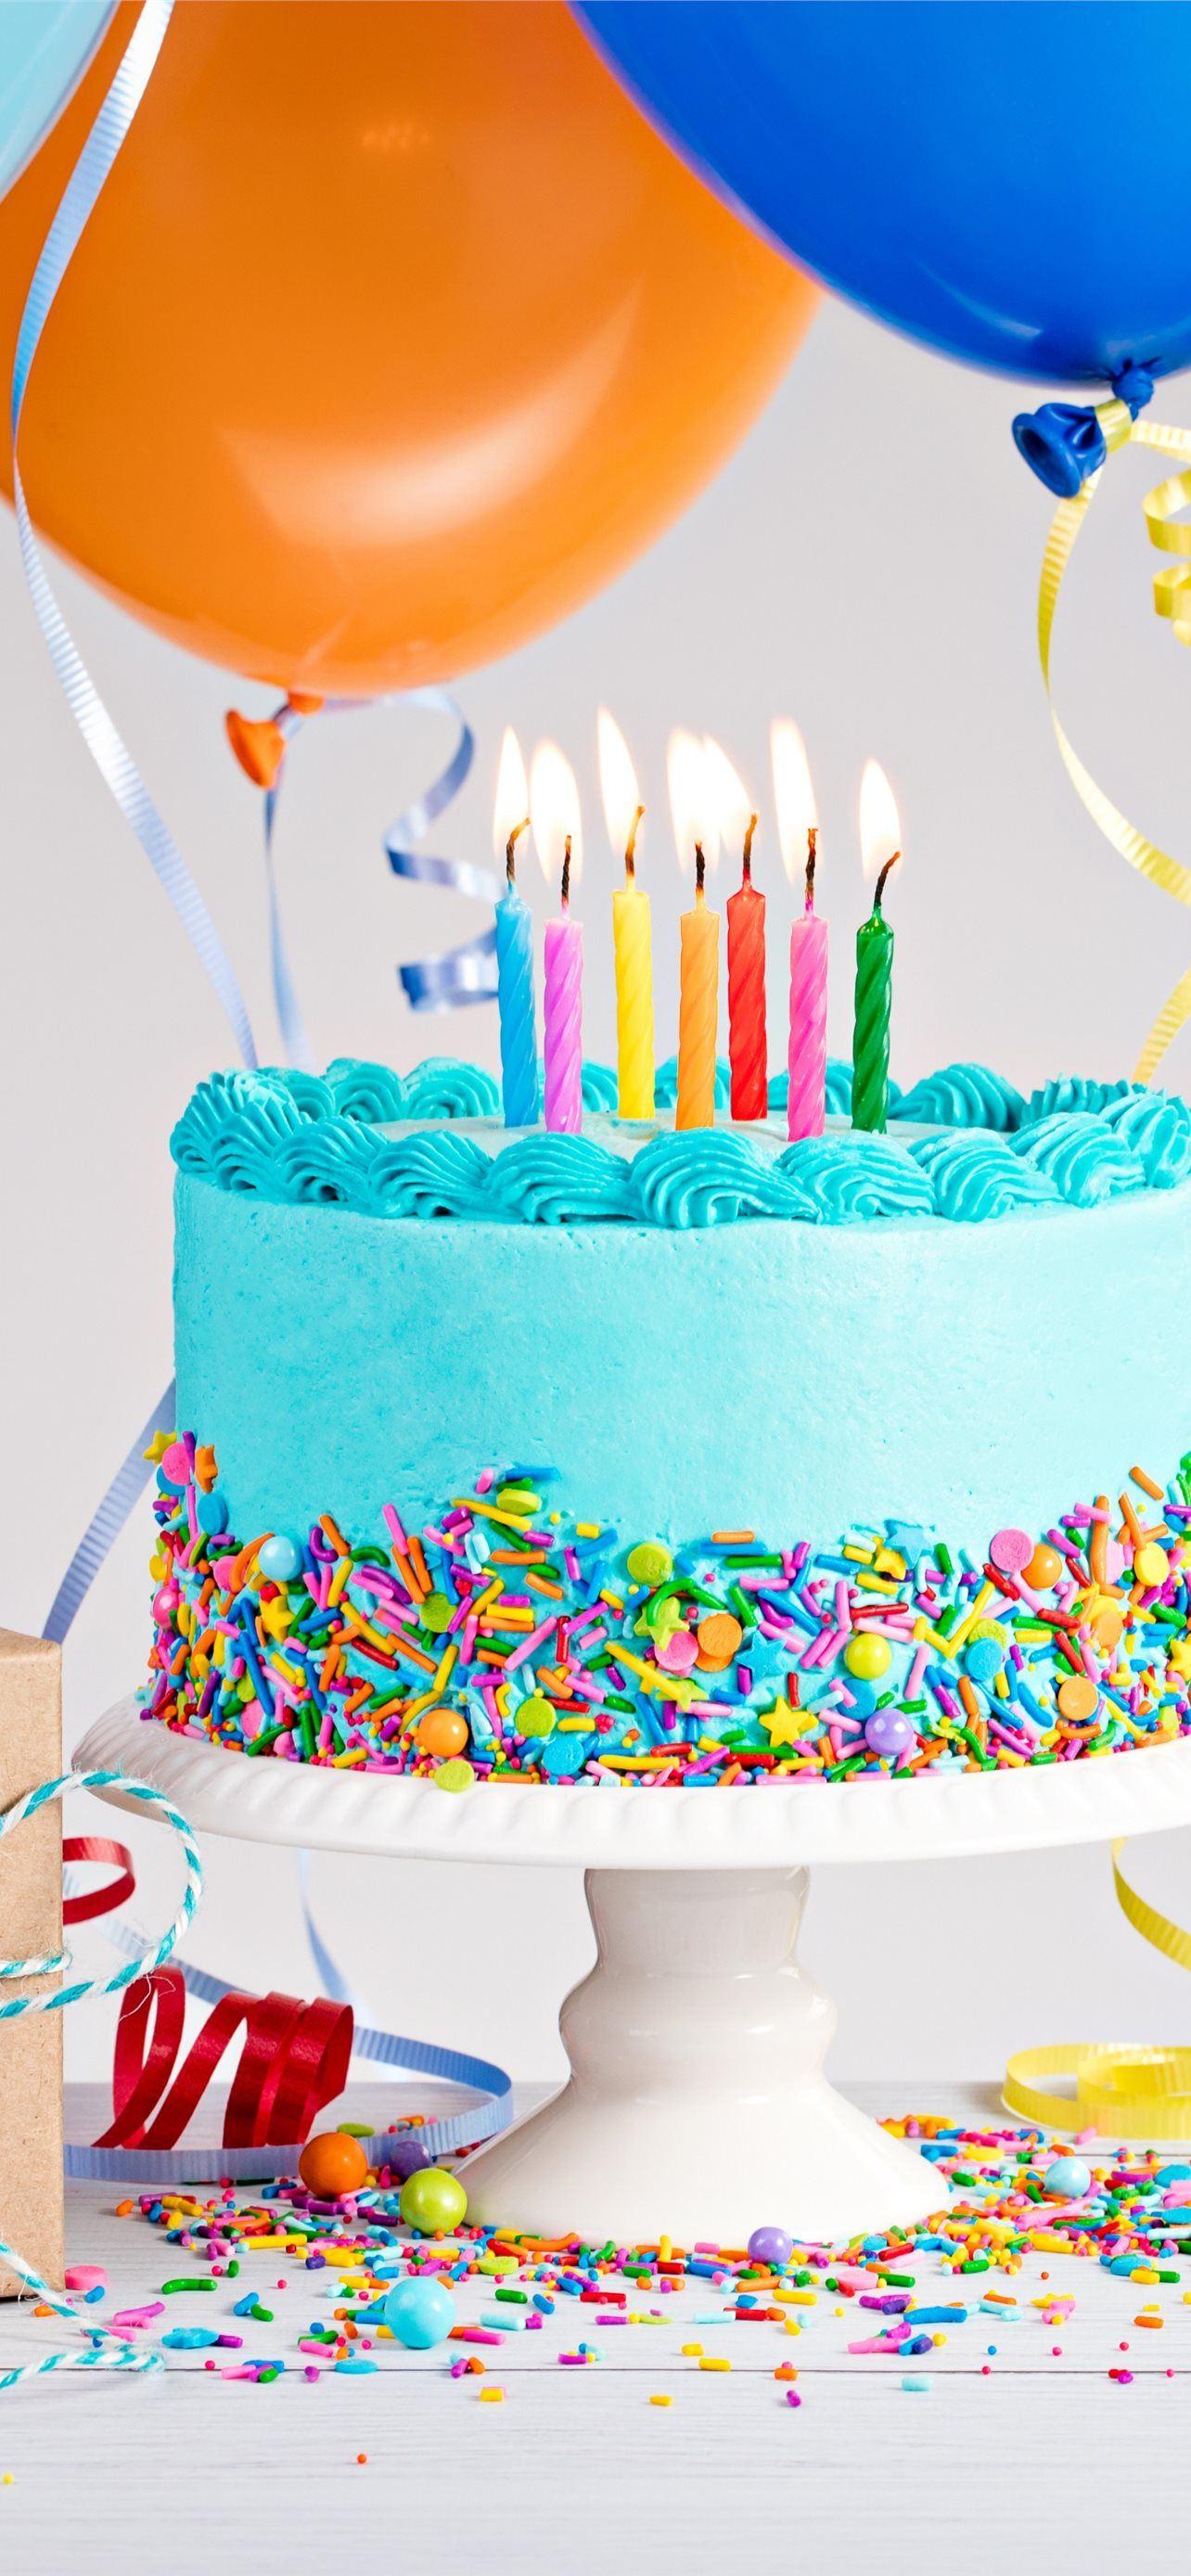 Birthday Cake Receipt 8k Food Iphone Wallpaper